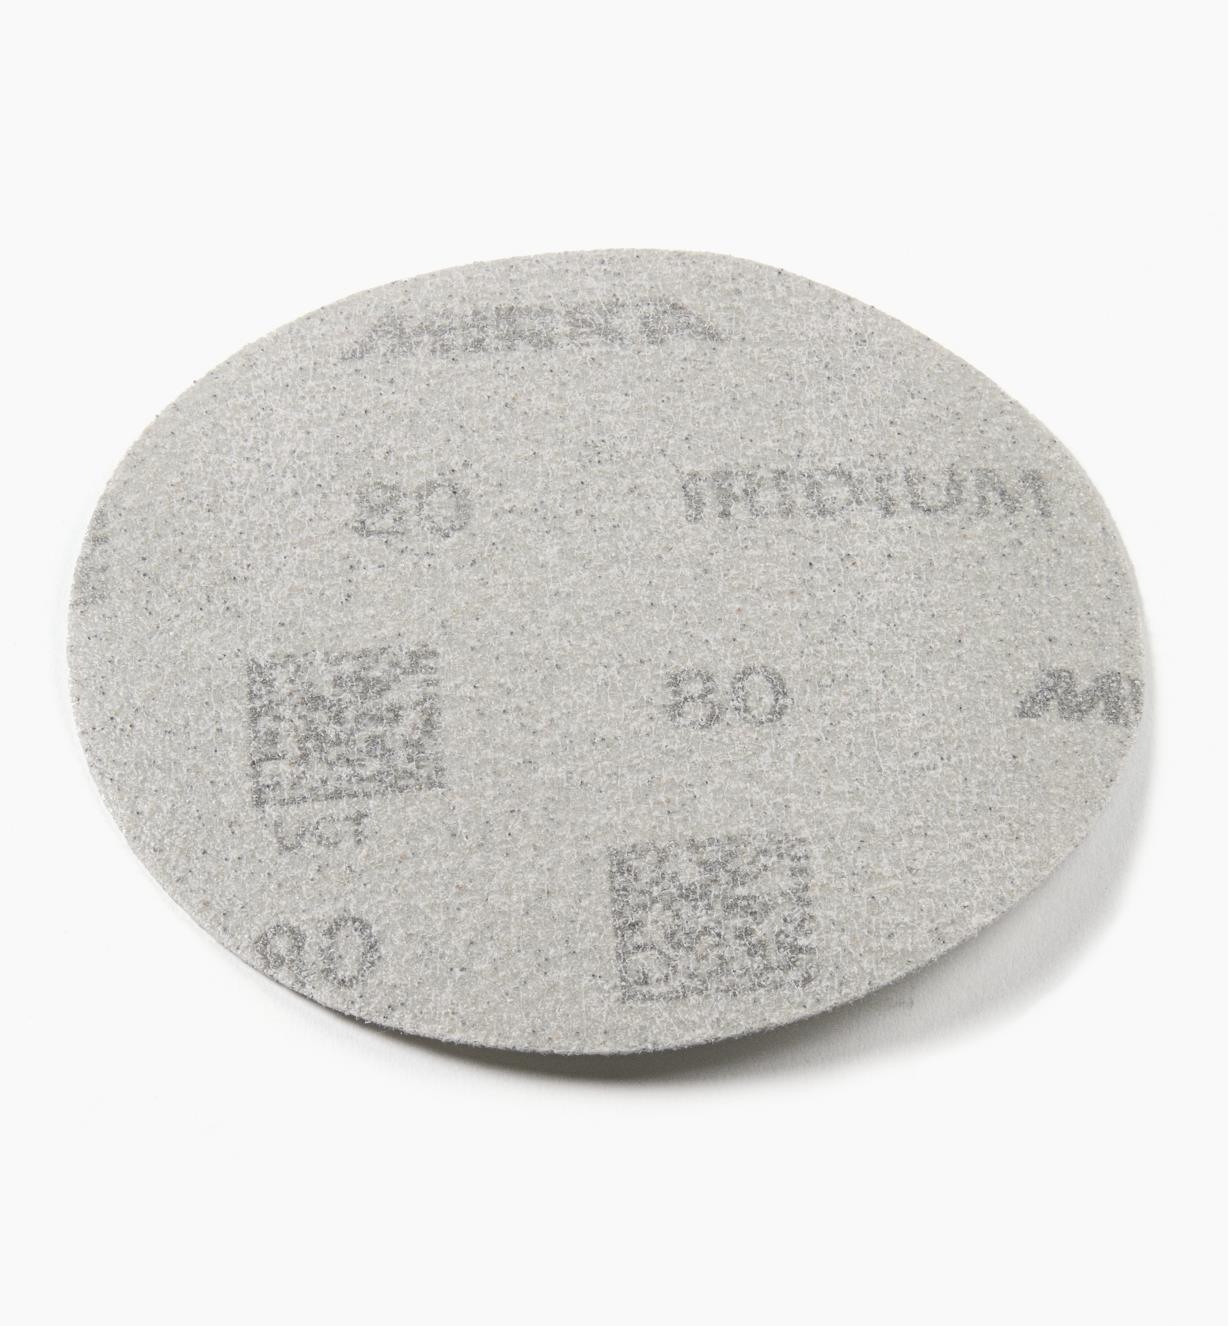 08K0941 - 80x 5" No-Hole Iridium Grip Disc, ea.